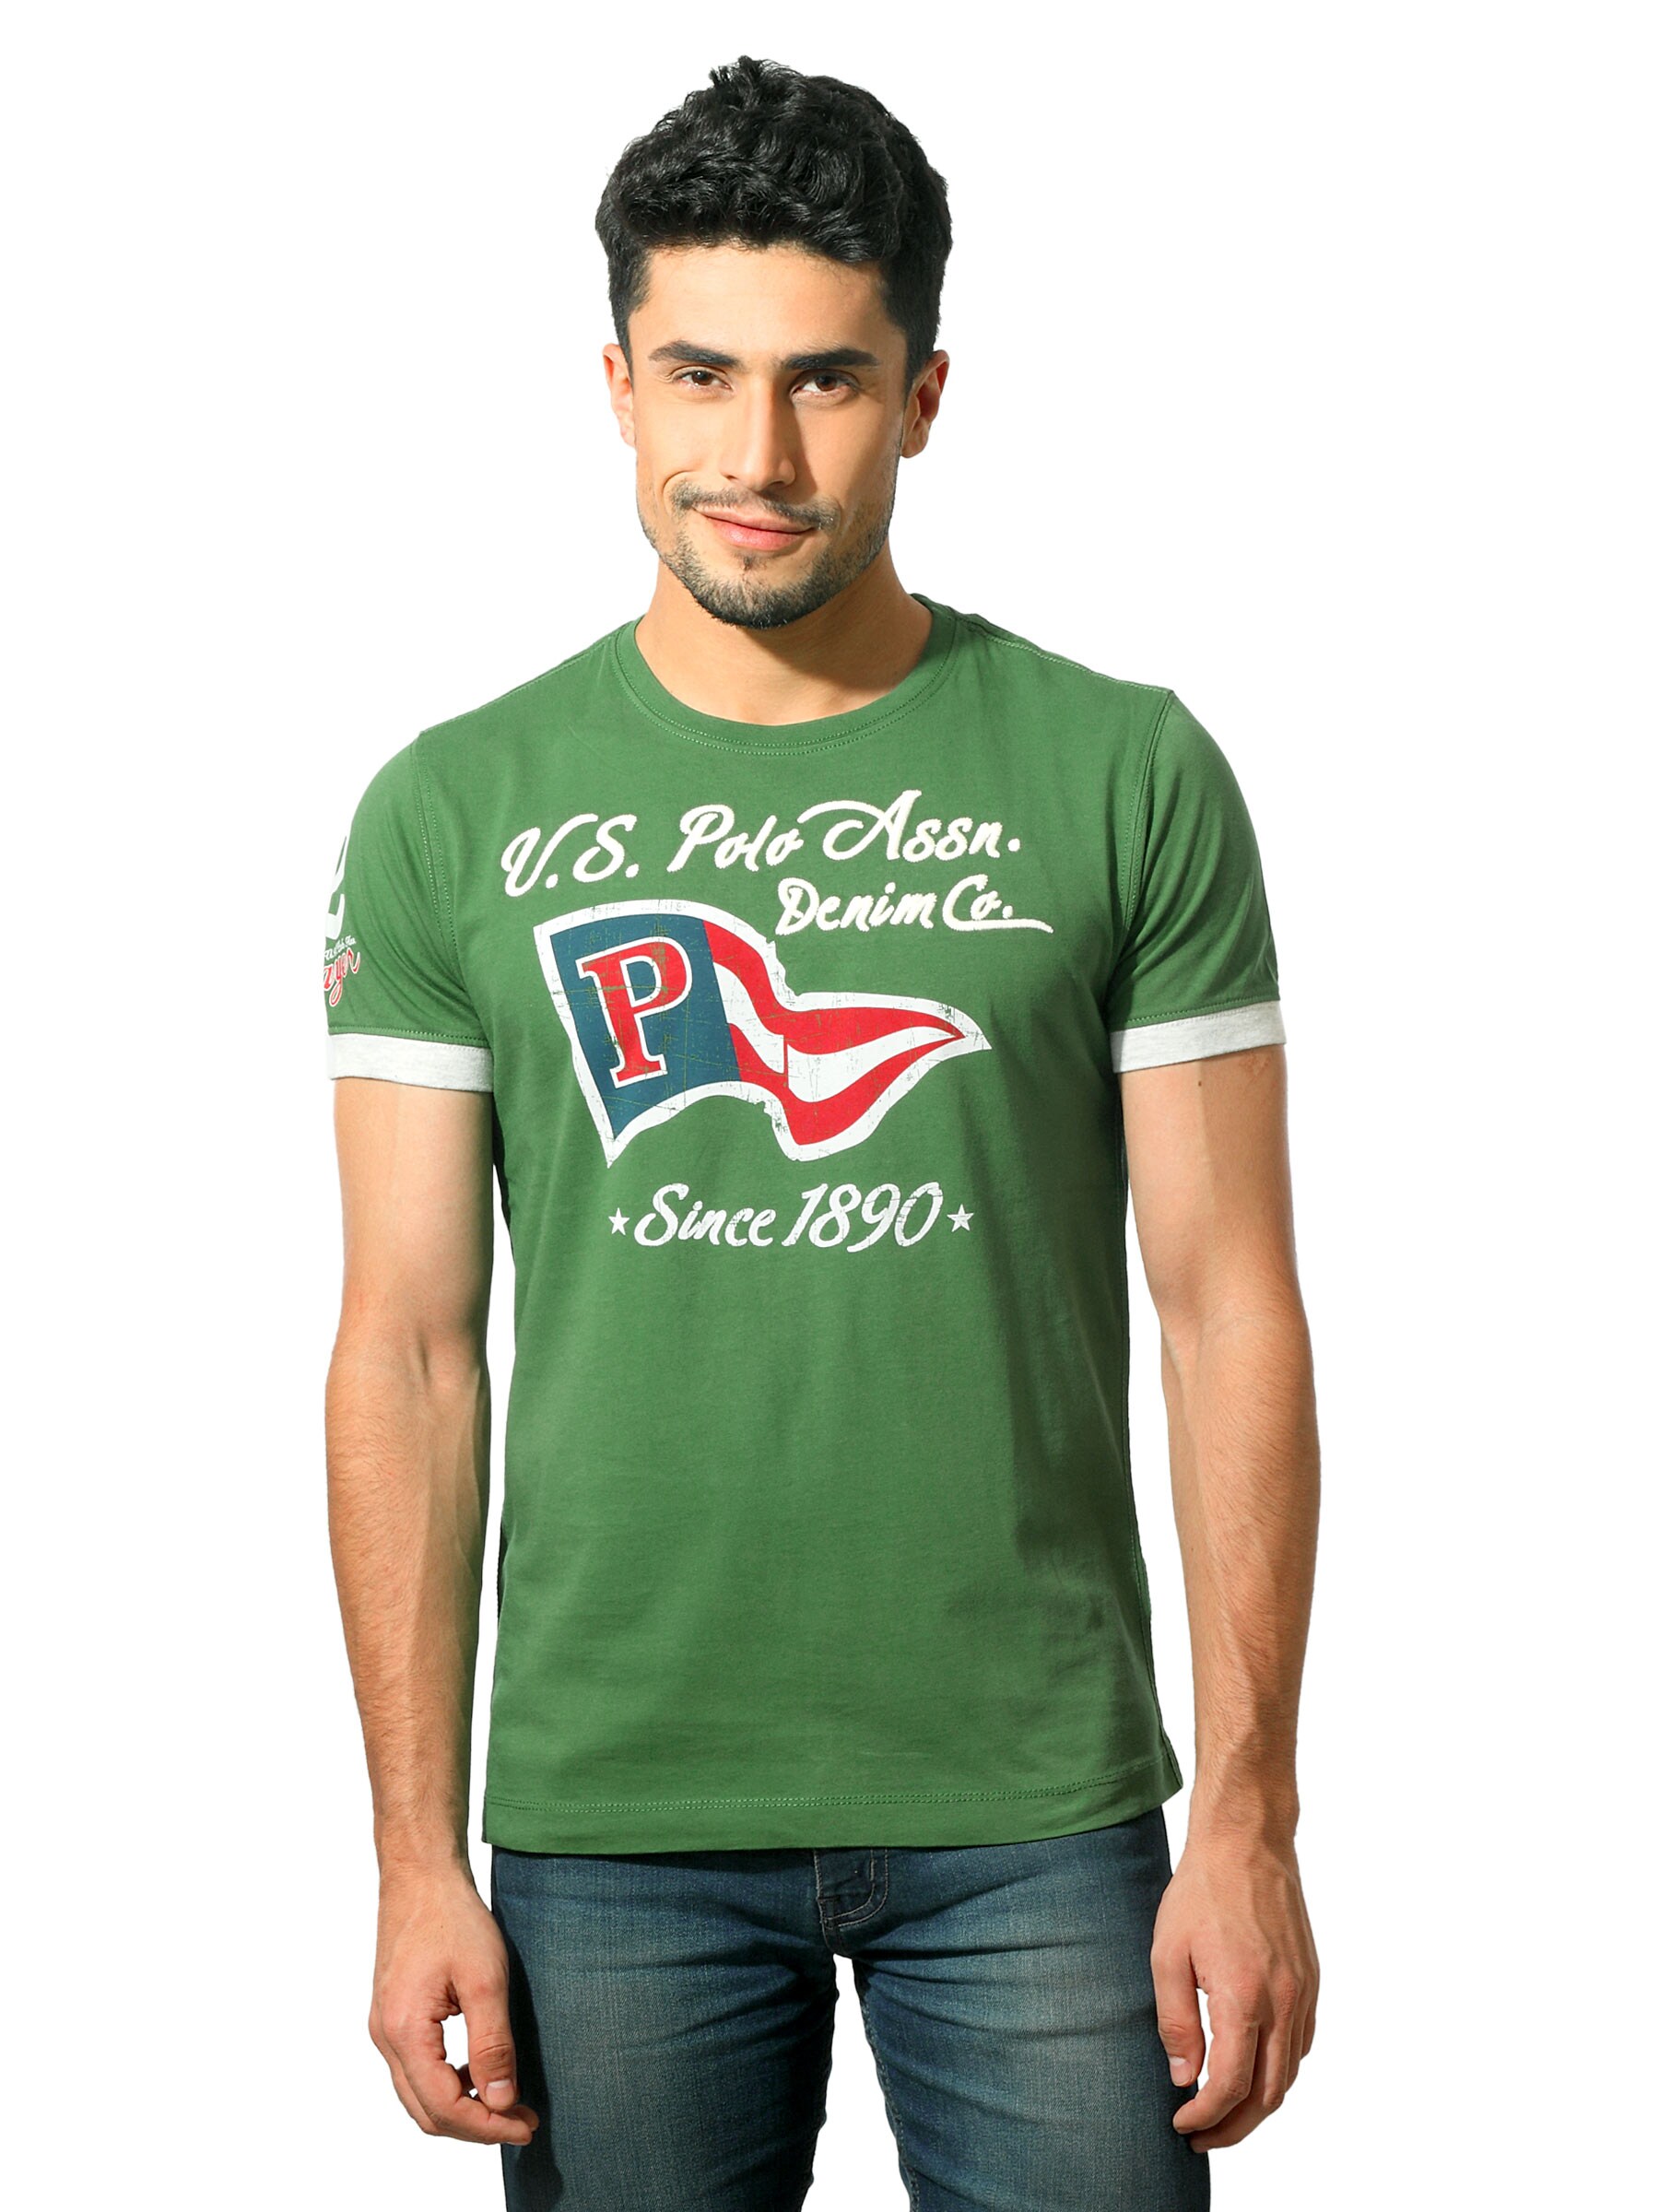 U.S. Polo Assn. Denim Co. Men Printed Green T-Shirt